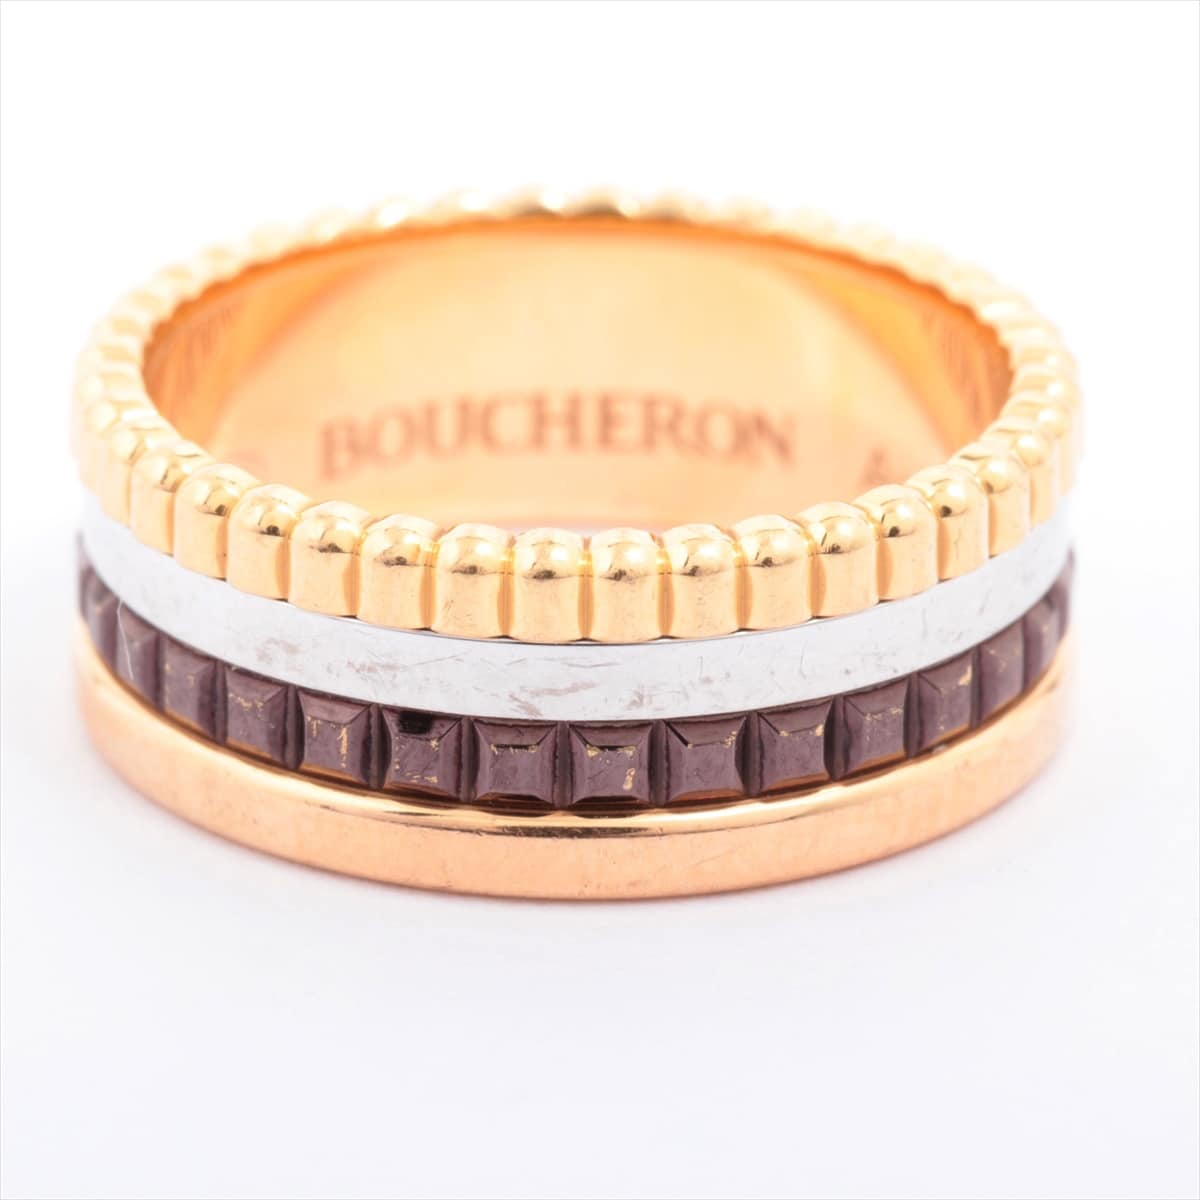 Boucheron BOUCHERON Quatre small rings 750YG×PG×WG #47